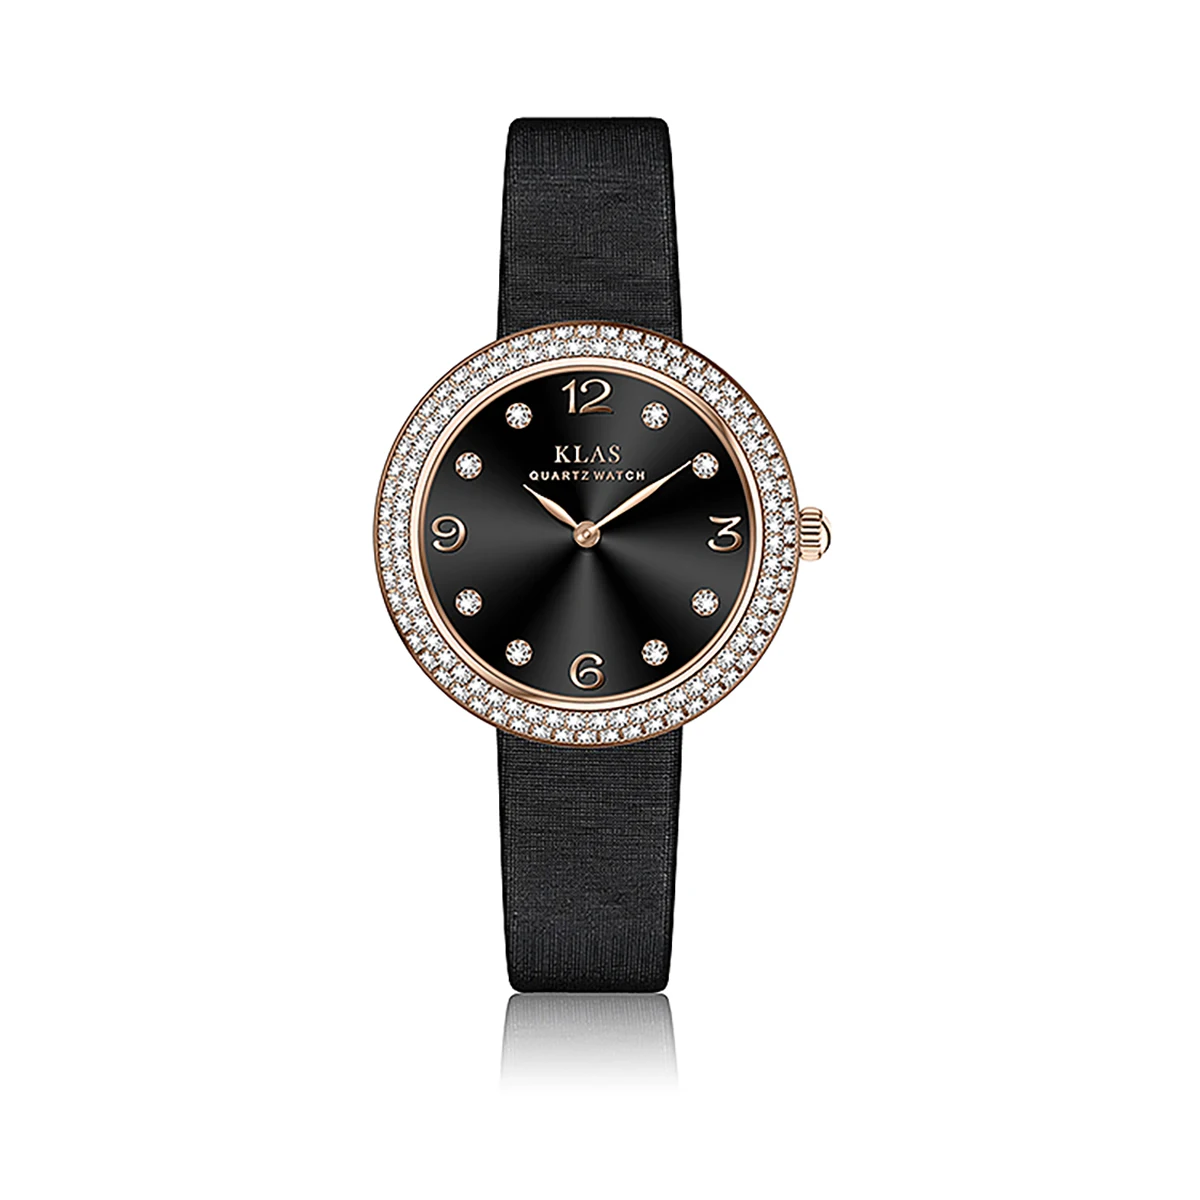 2021 Top Brand Luxury Watches Women's Popular Quartz Leather Bracelet Women Ladies Dress Watch KLAS Brand